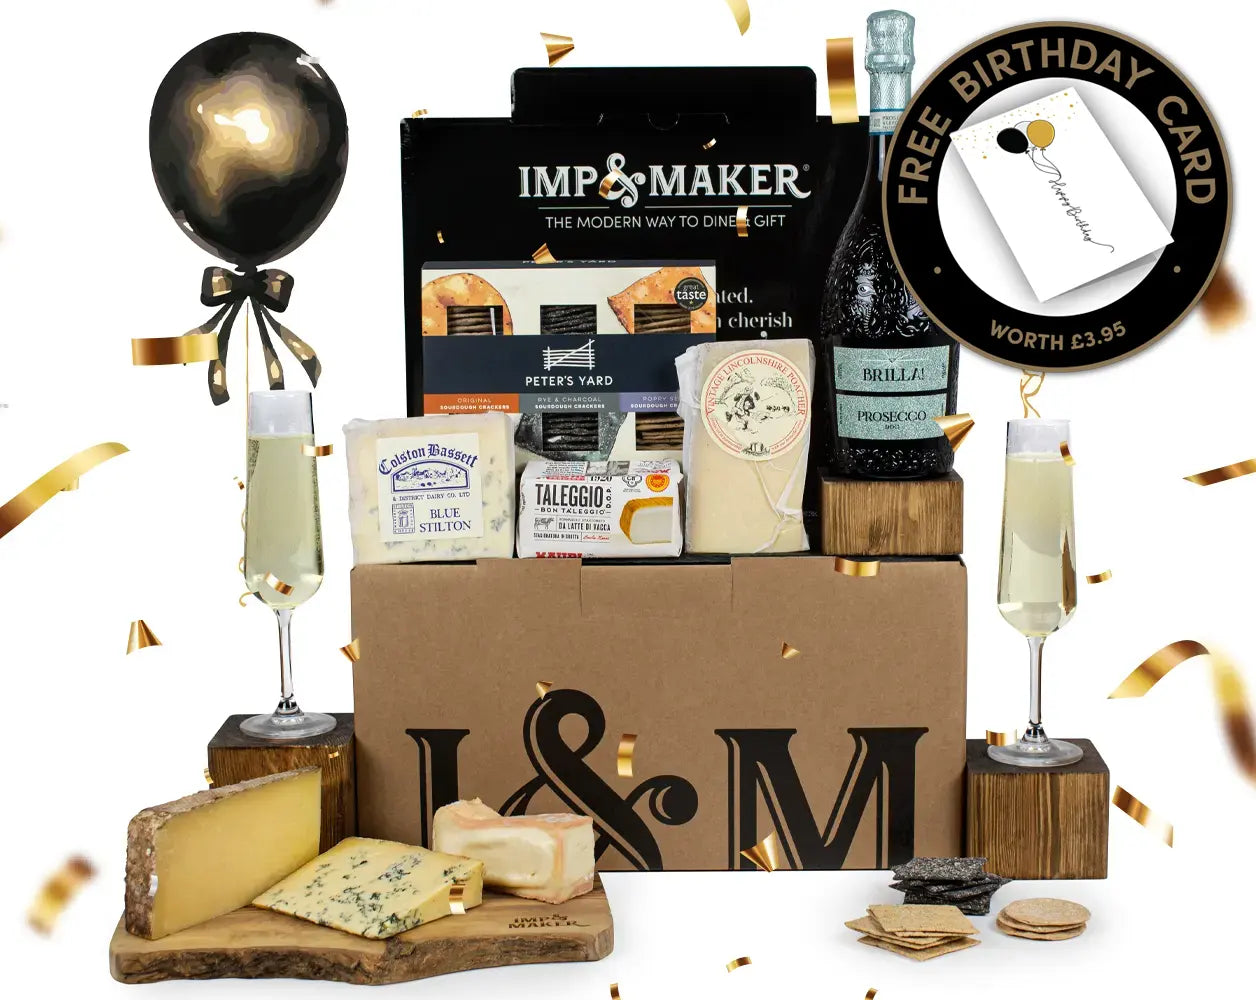 Birthday Prosecco & Cheese Gift Hamper - IMP & MAKER